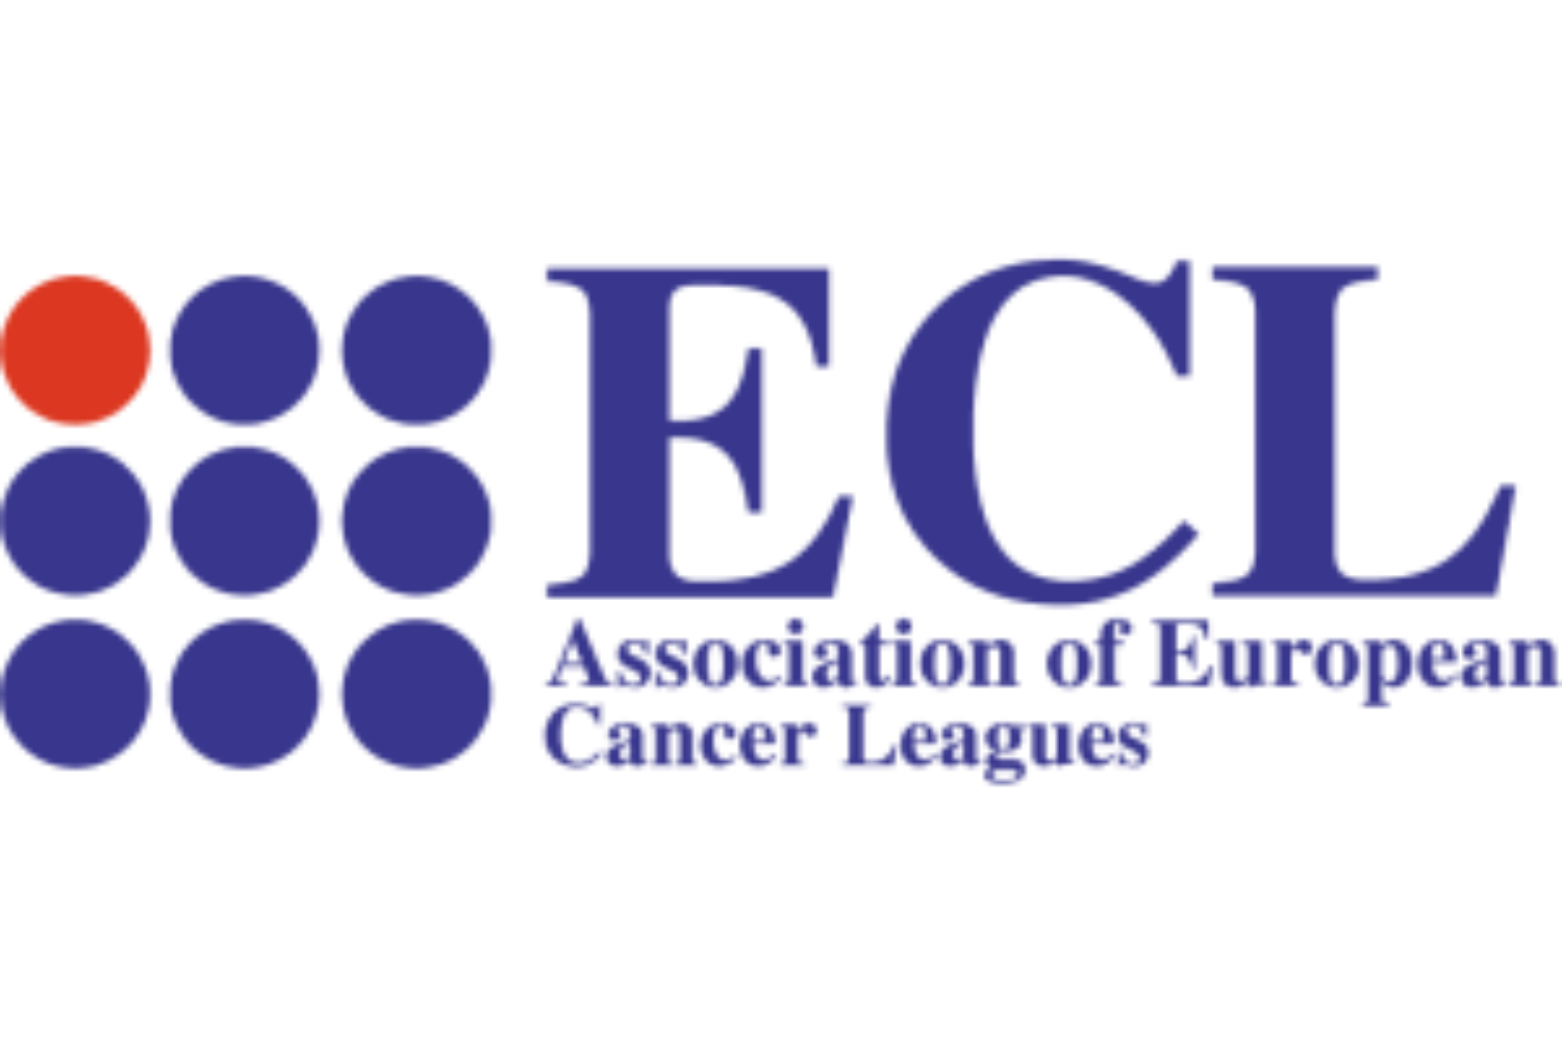 ASSOCIATION OF EUROPAN CANCER LEAGUES LOGO